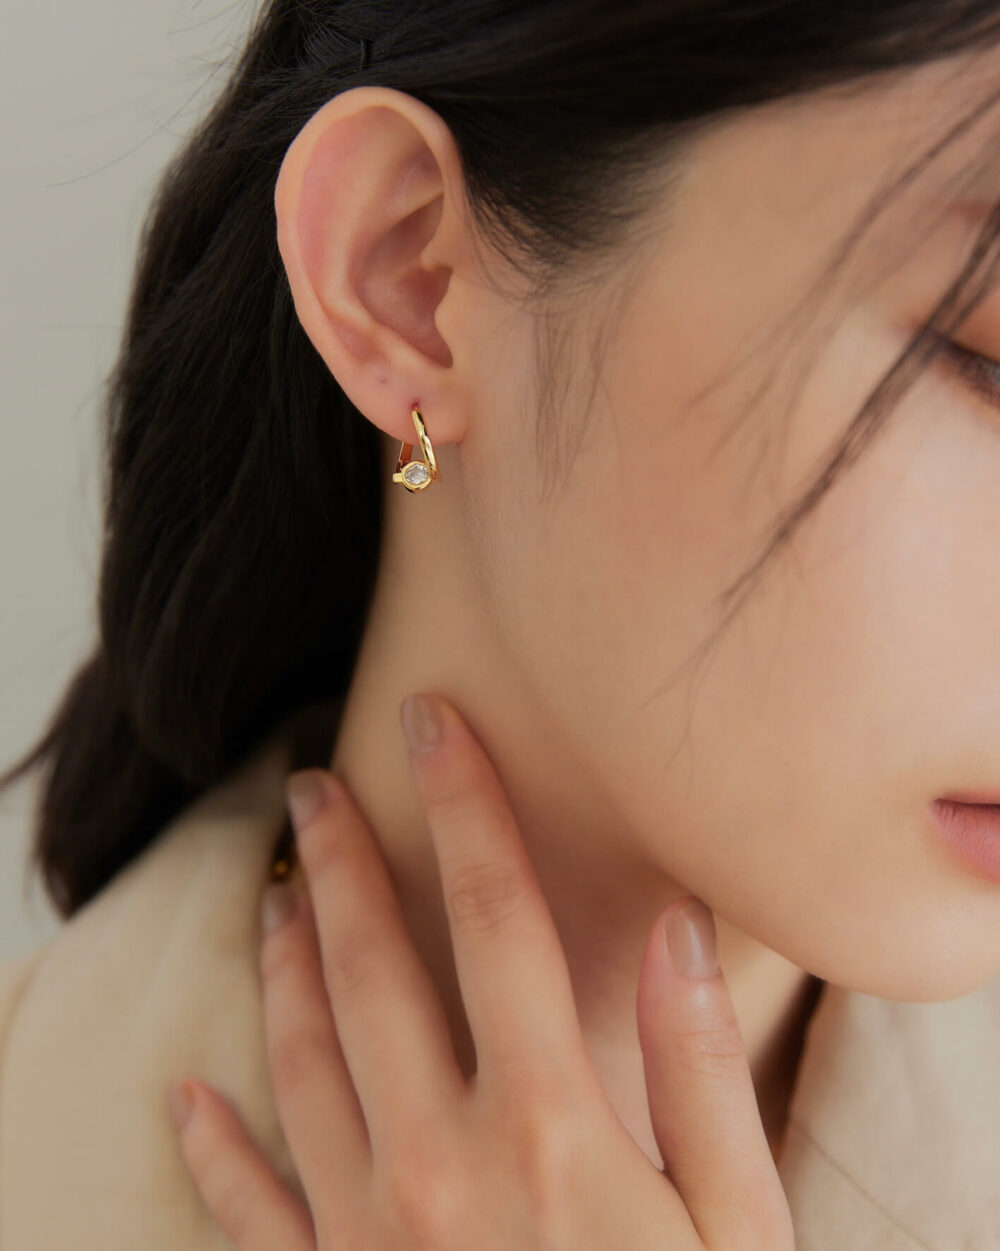 Eco安珂,韓國飾品,韓國耳環,耳針式耳環,C圈耳環,愛心耳環,鑽耳環,戴著睡覺